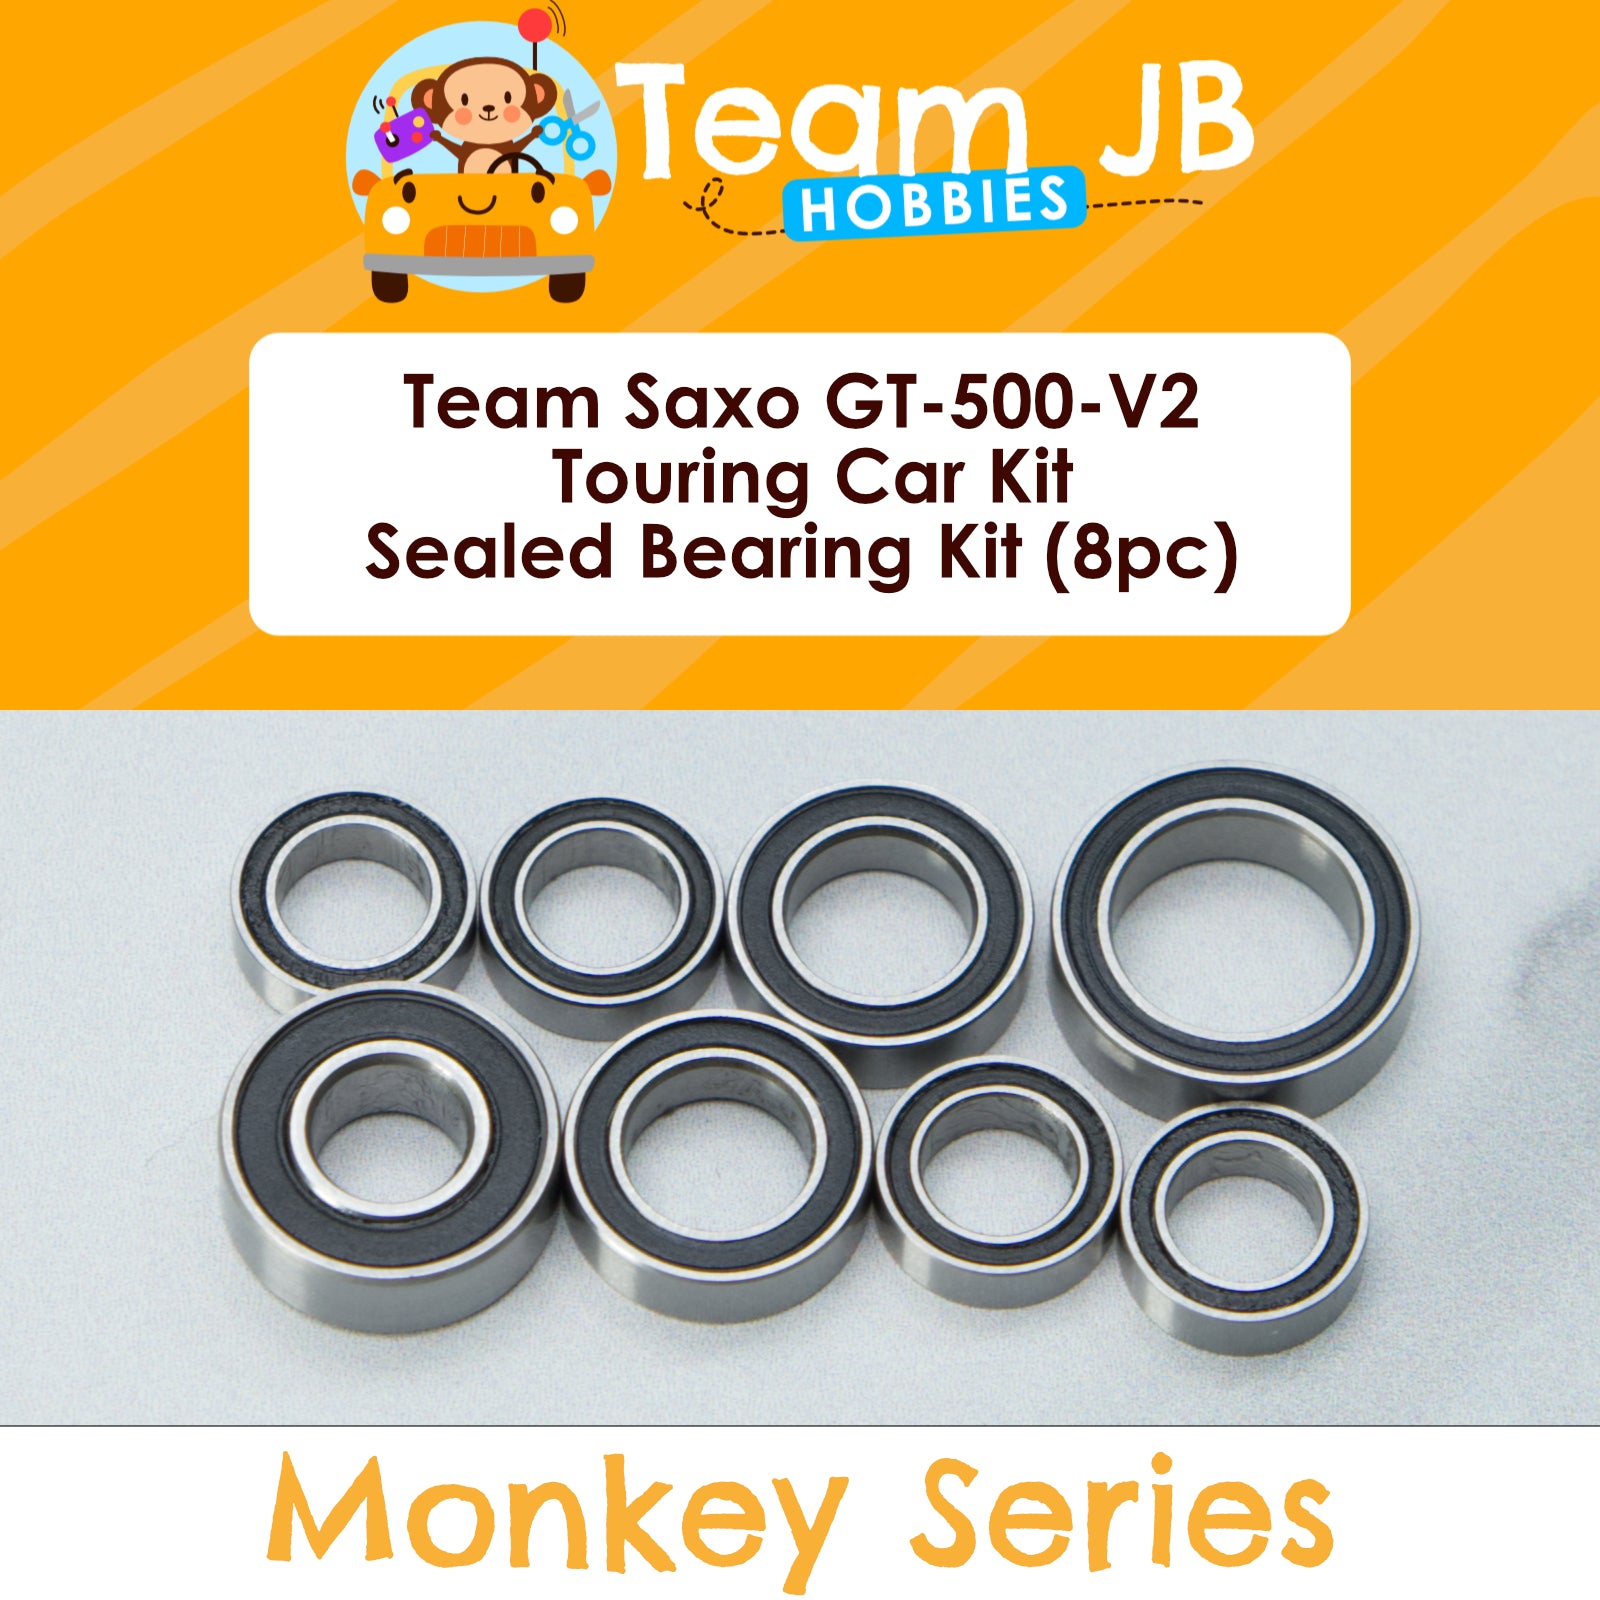 Team Saxo GT-500-V2 Touring Car Kit - Sealed Bearing Kit